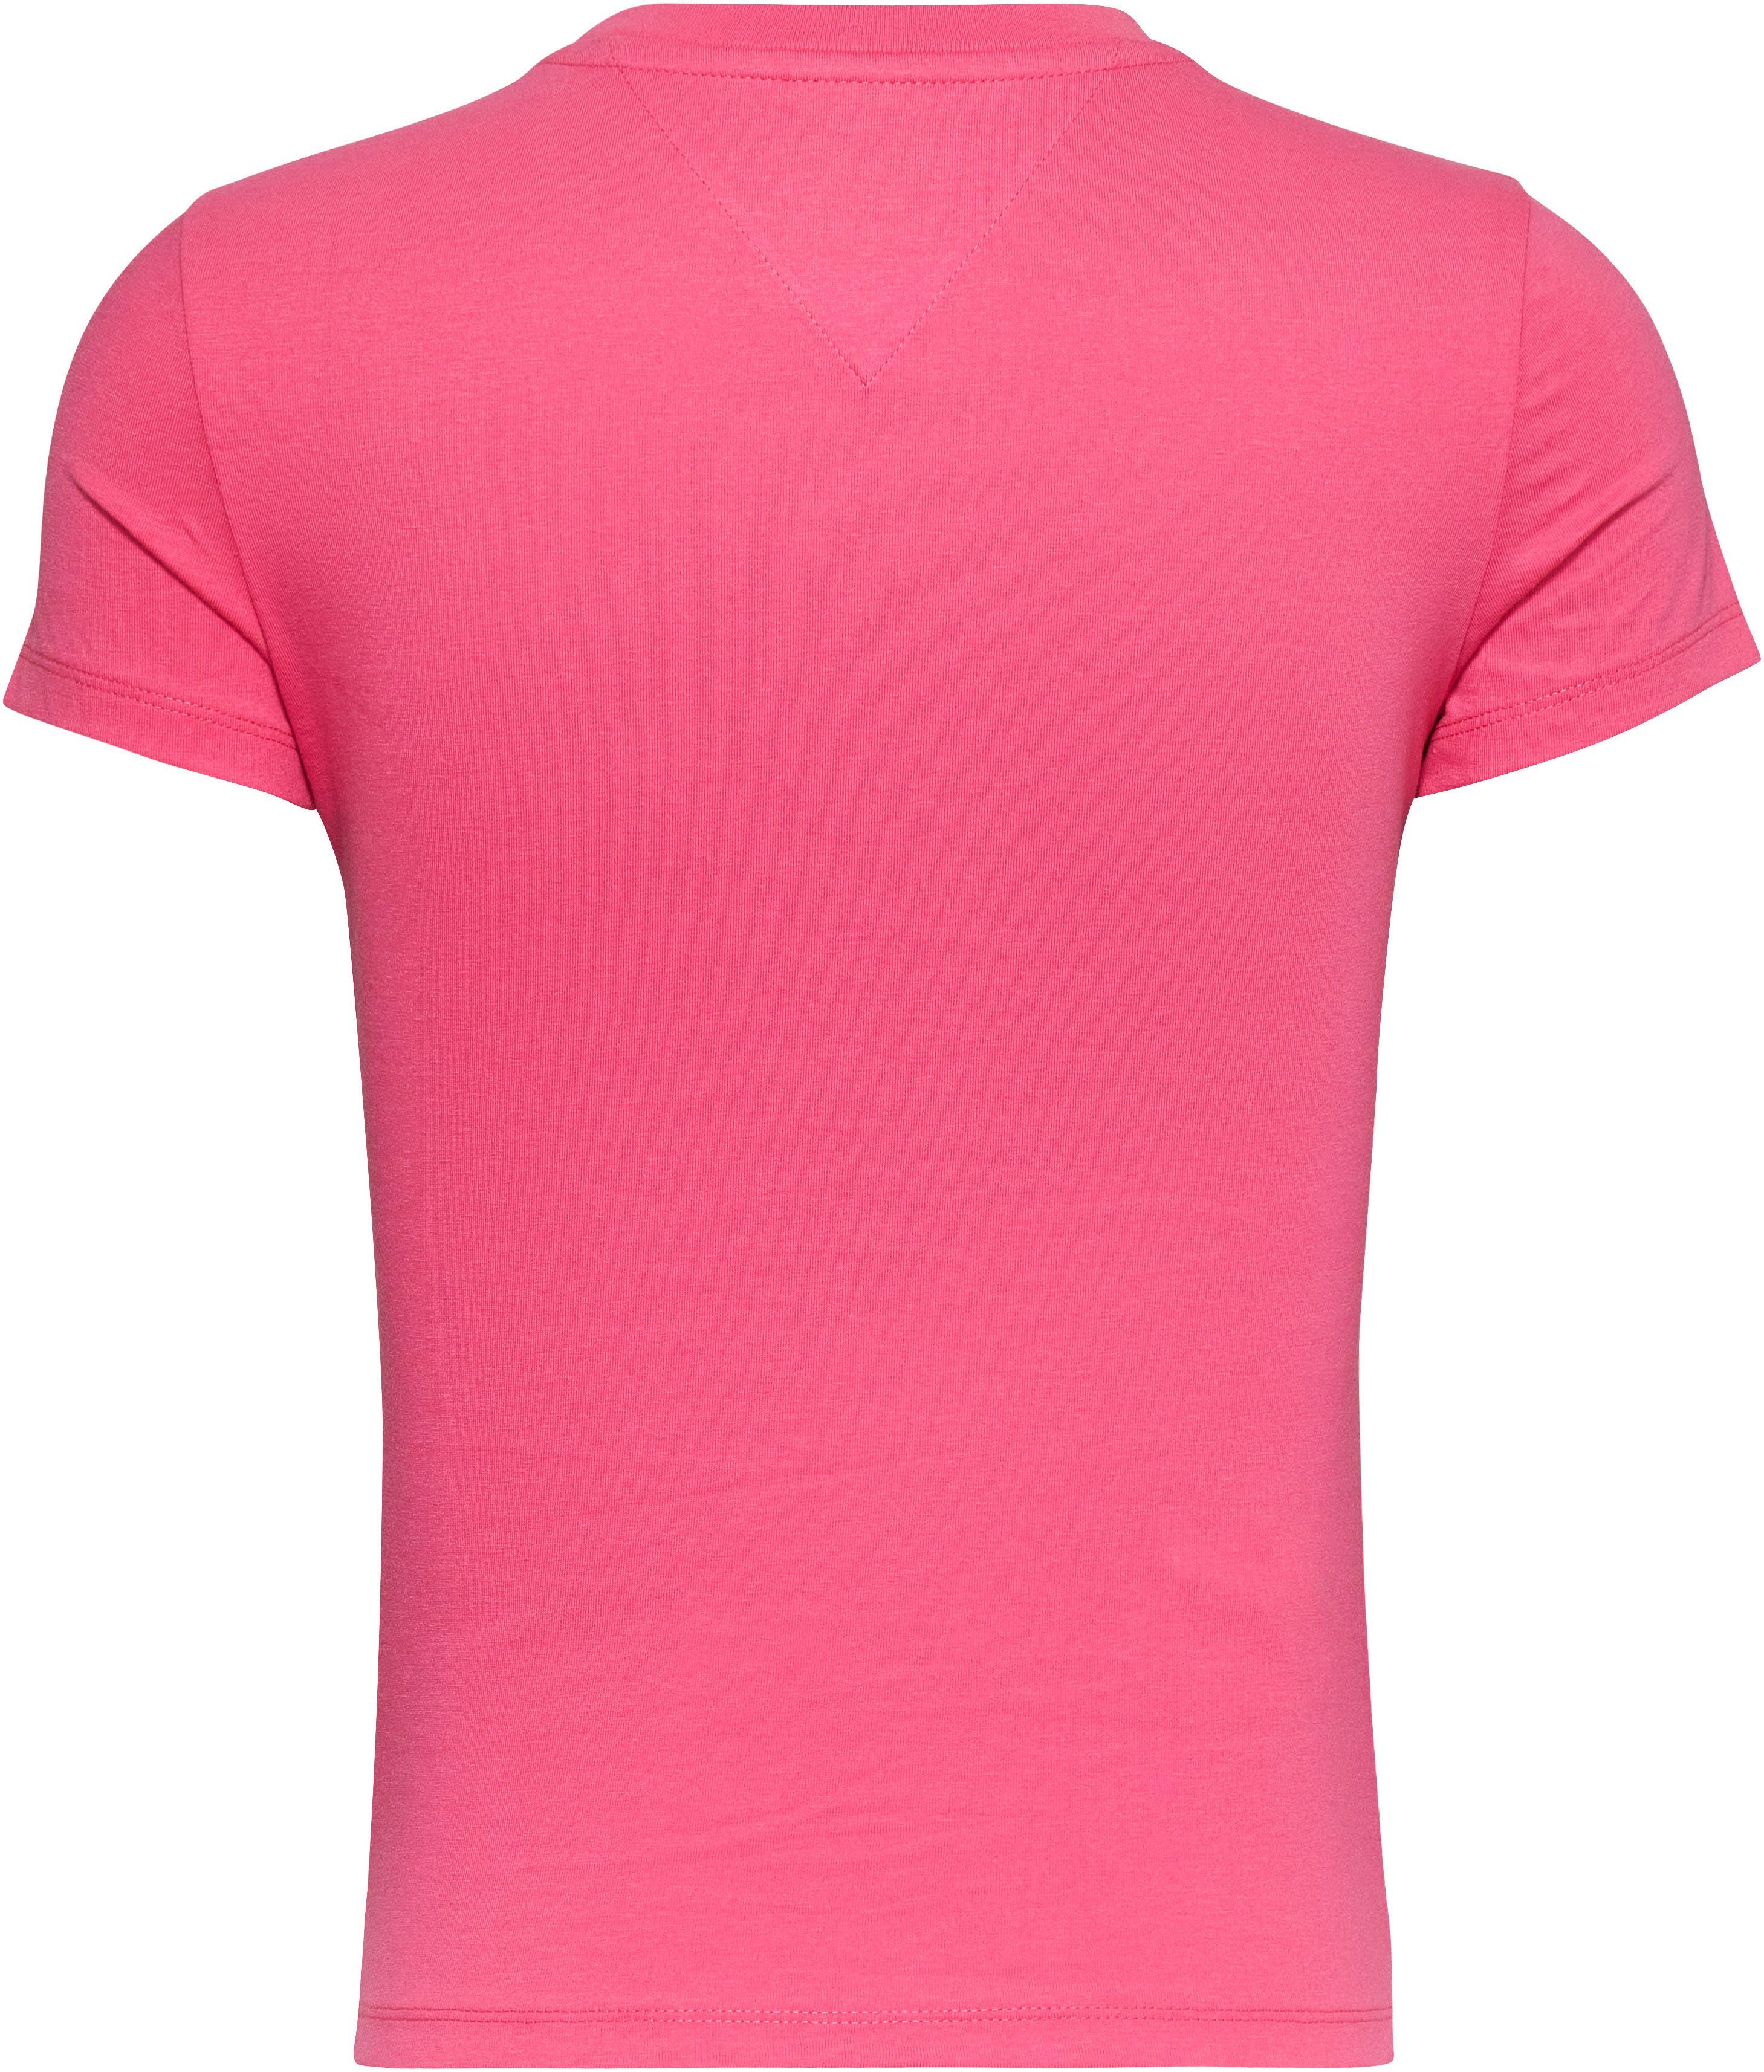 Tommy Logoschriftzug mit Pink_Alert Logo Essential Jeans Slim T-Shirt